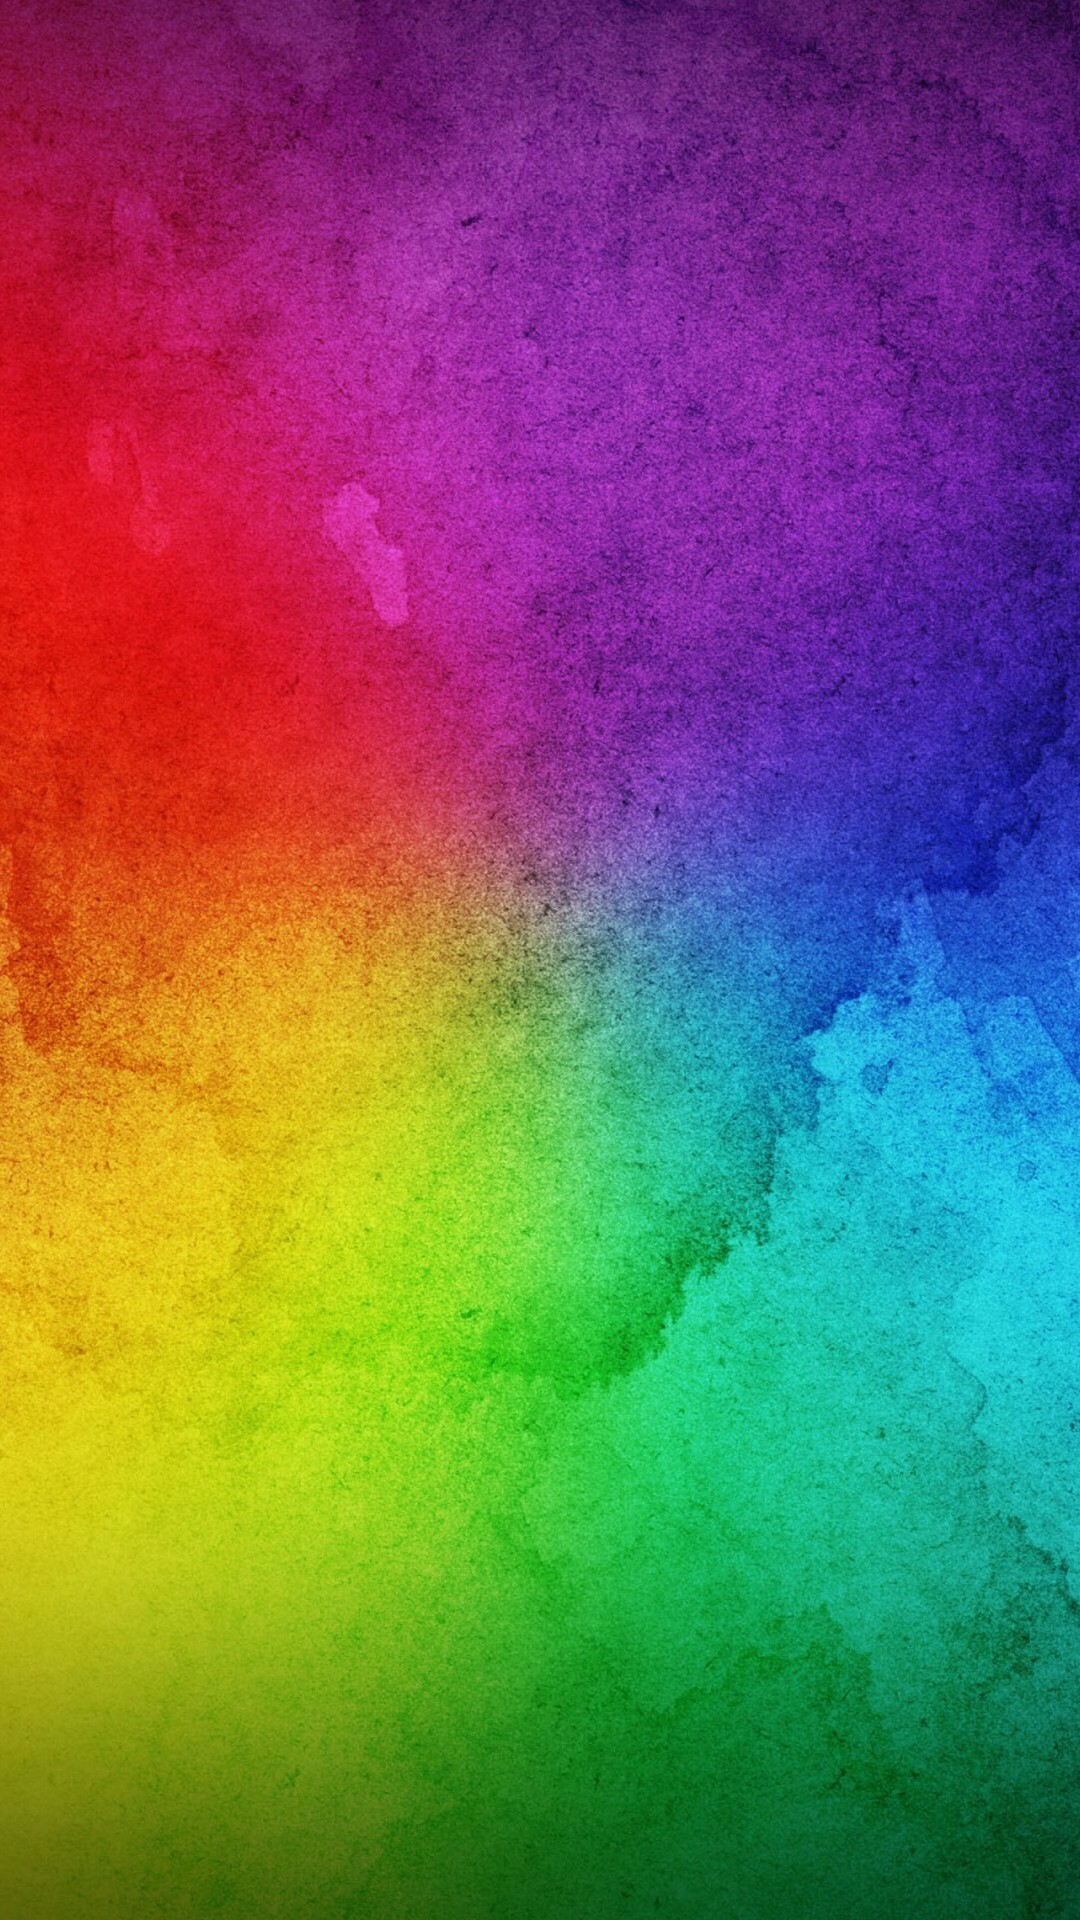 Rainbow Colors: Abstract gradient, Visual illustration, Art. 1080x1920 Full HD Wallpaper.